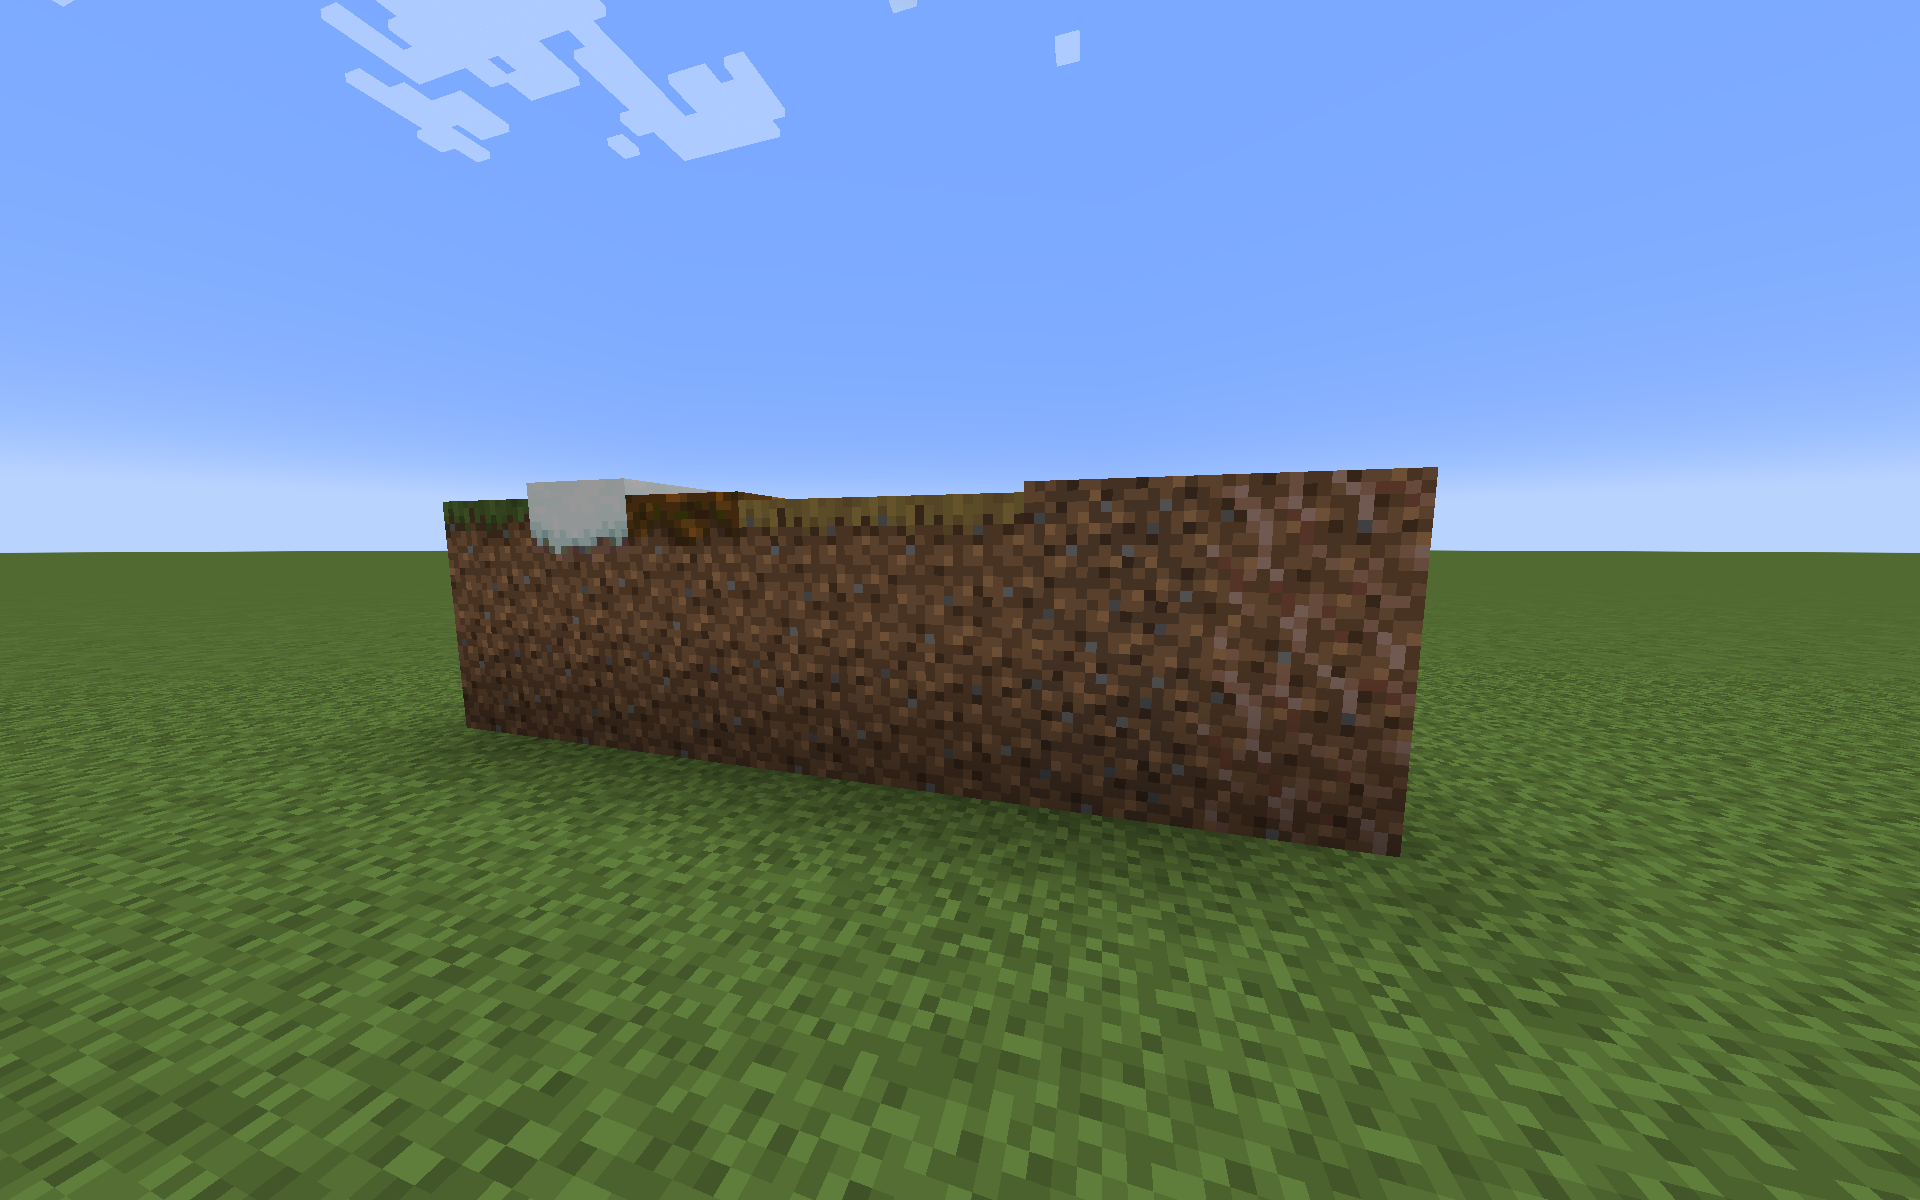 Dirt and Grass blocks